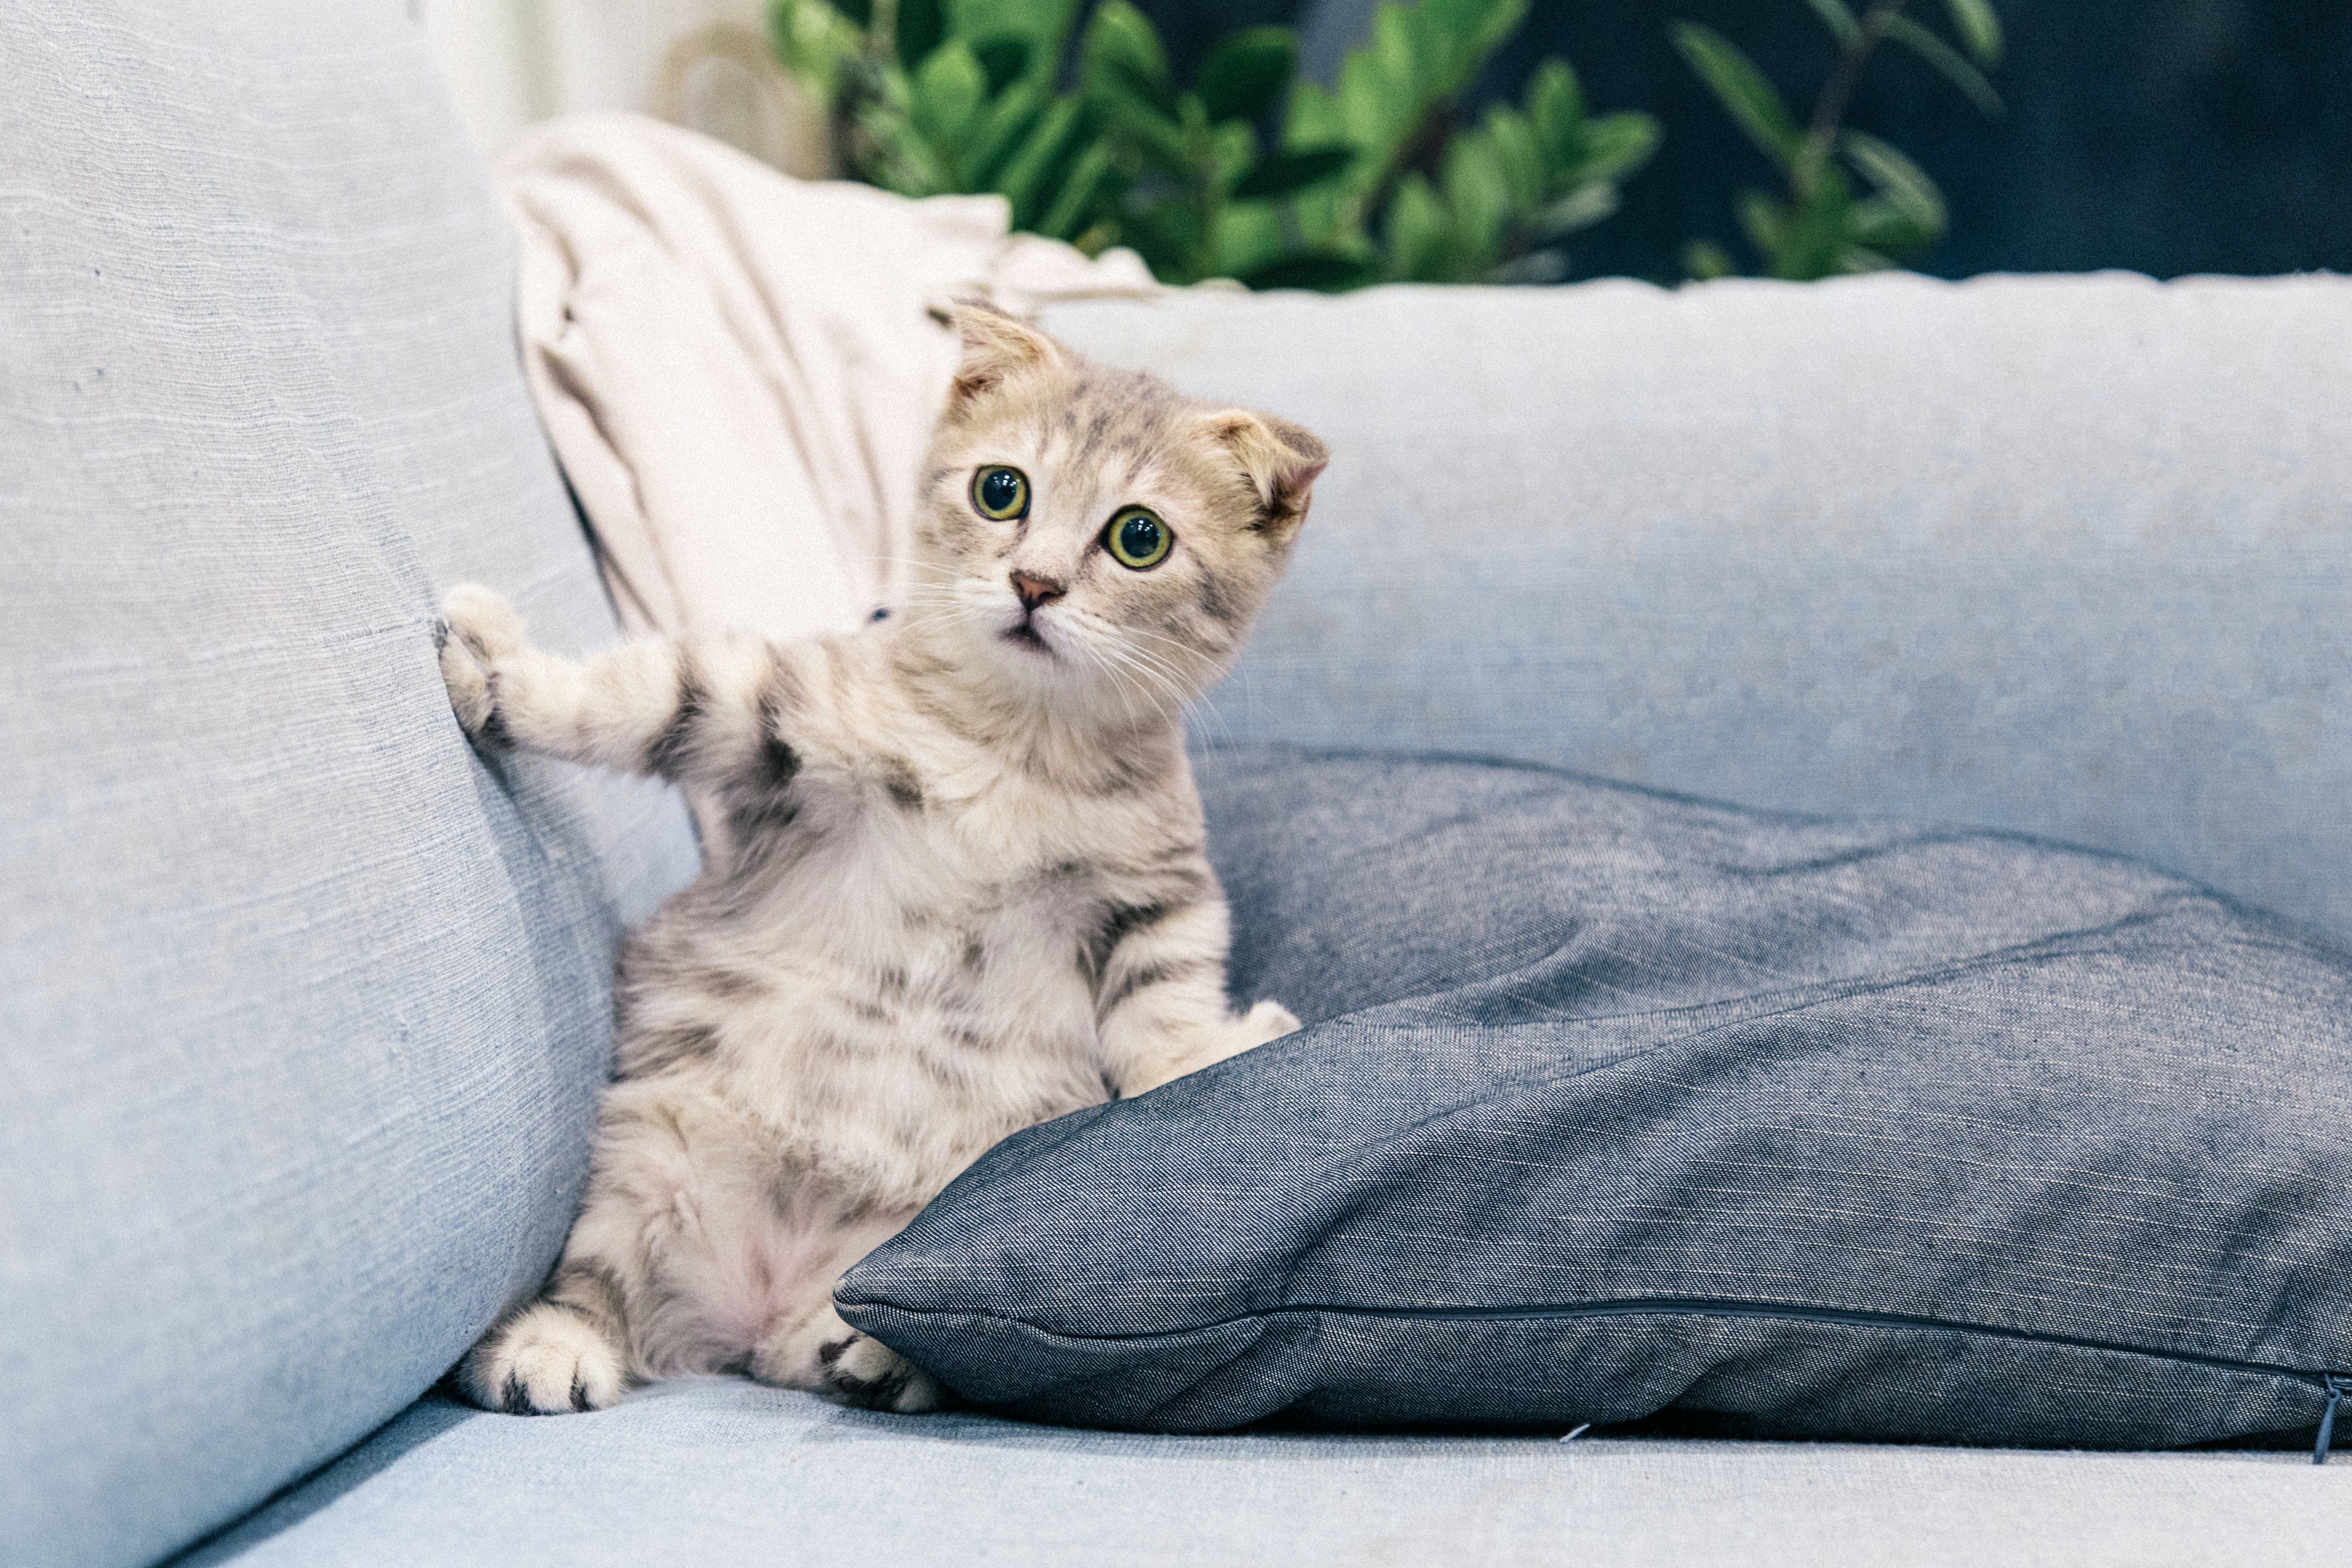 Cute kitten on a sofa. | Source: Pexels